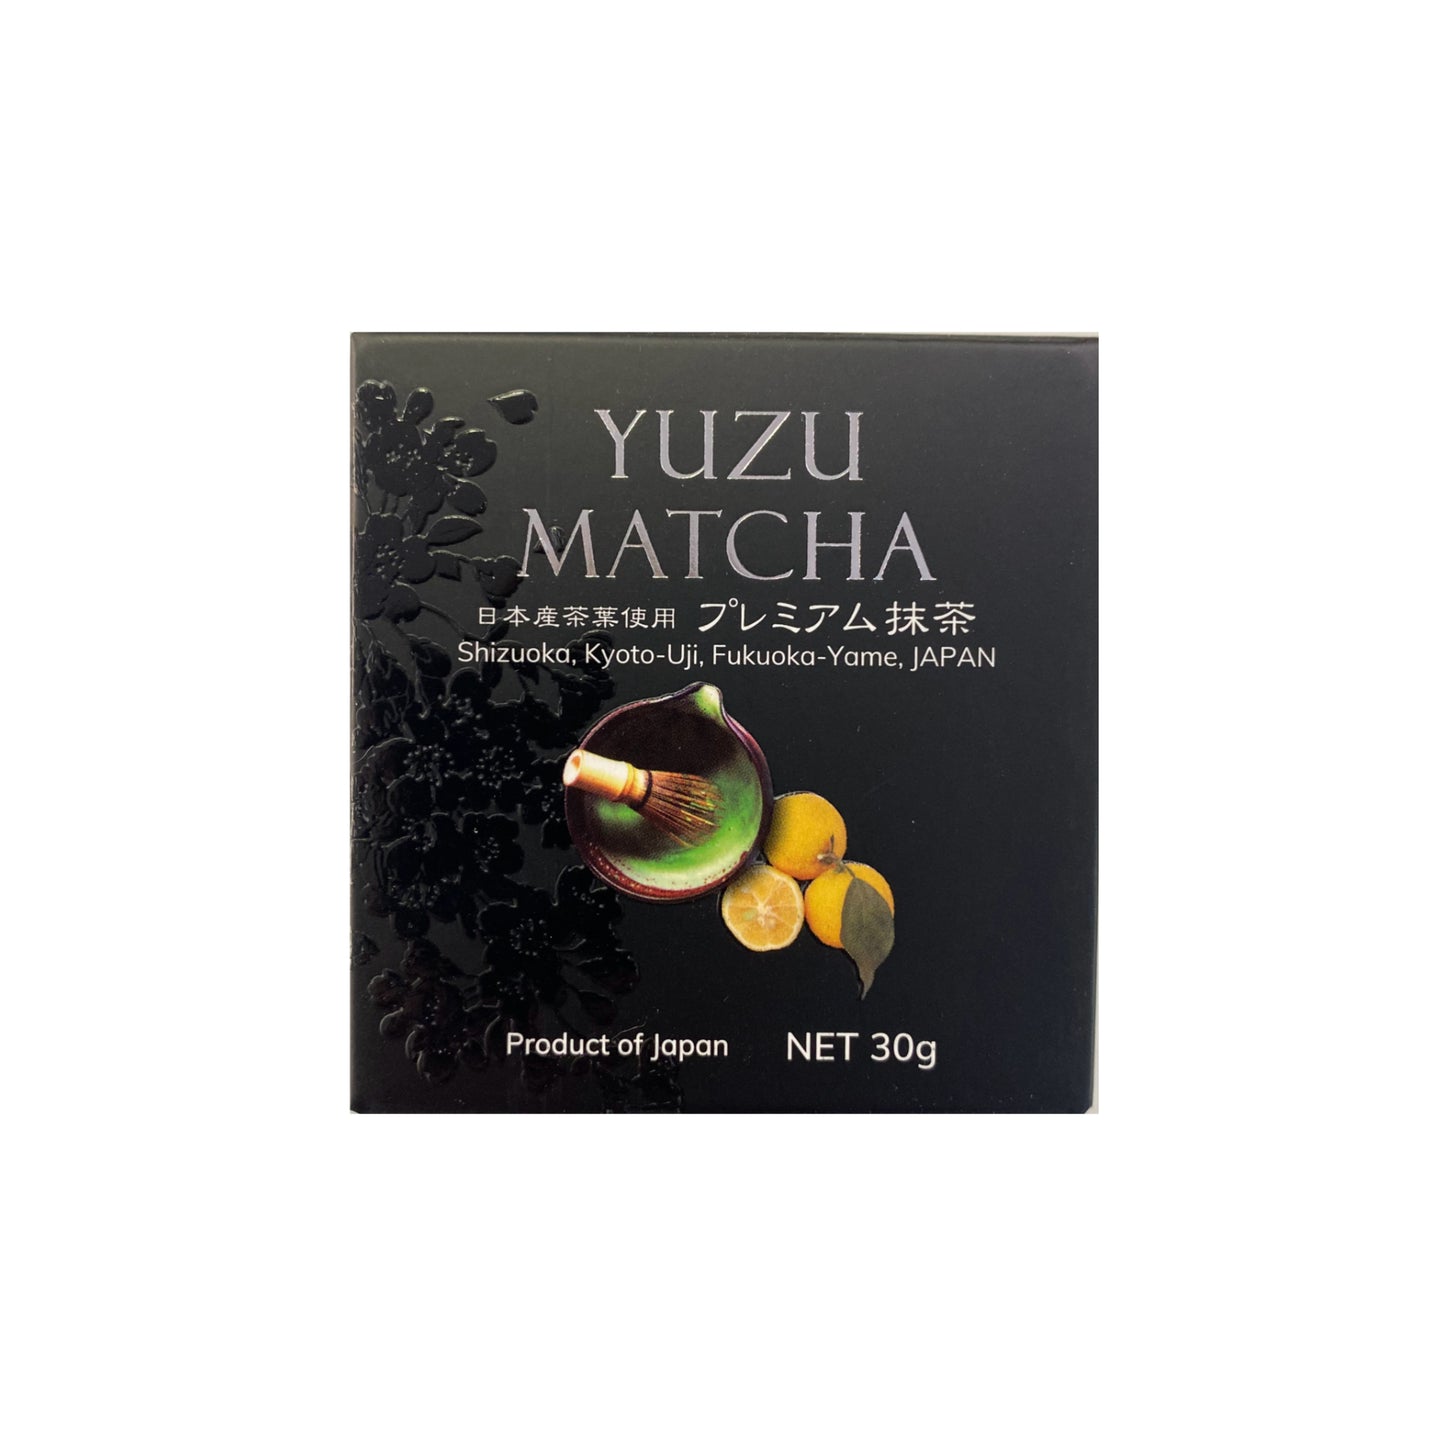 Matcha and Tea Powder Set